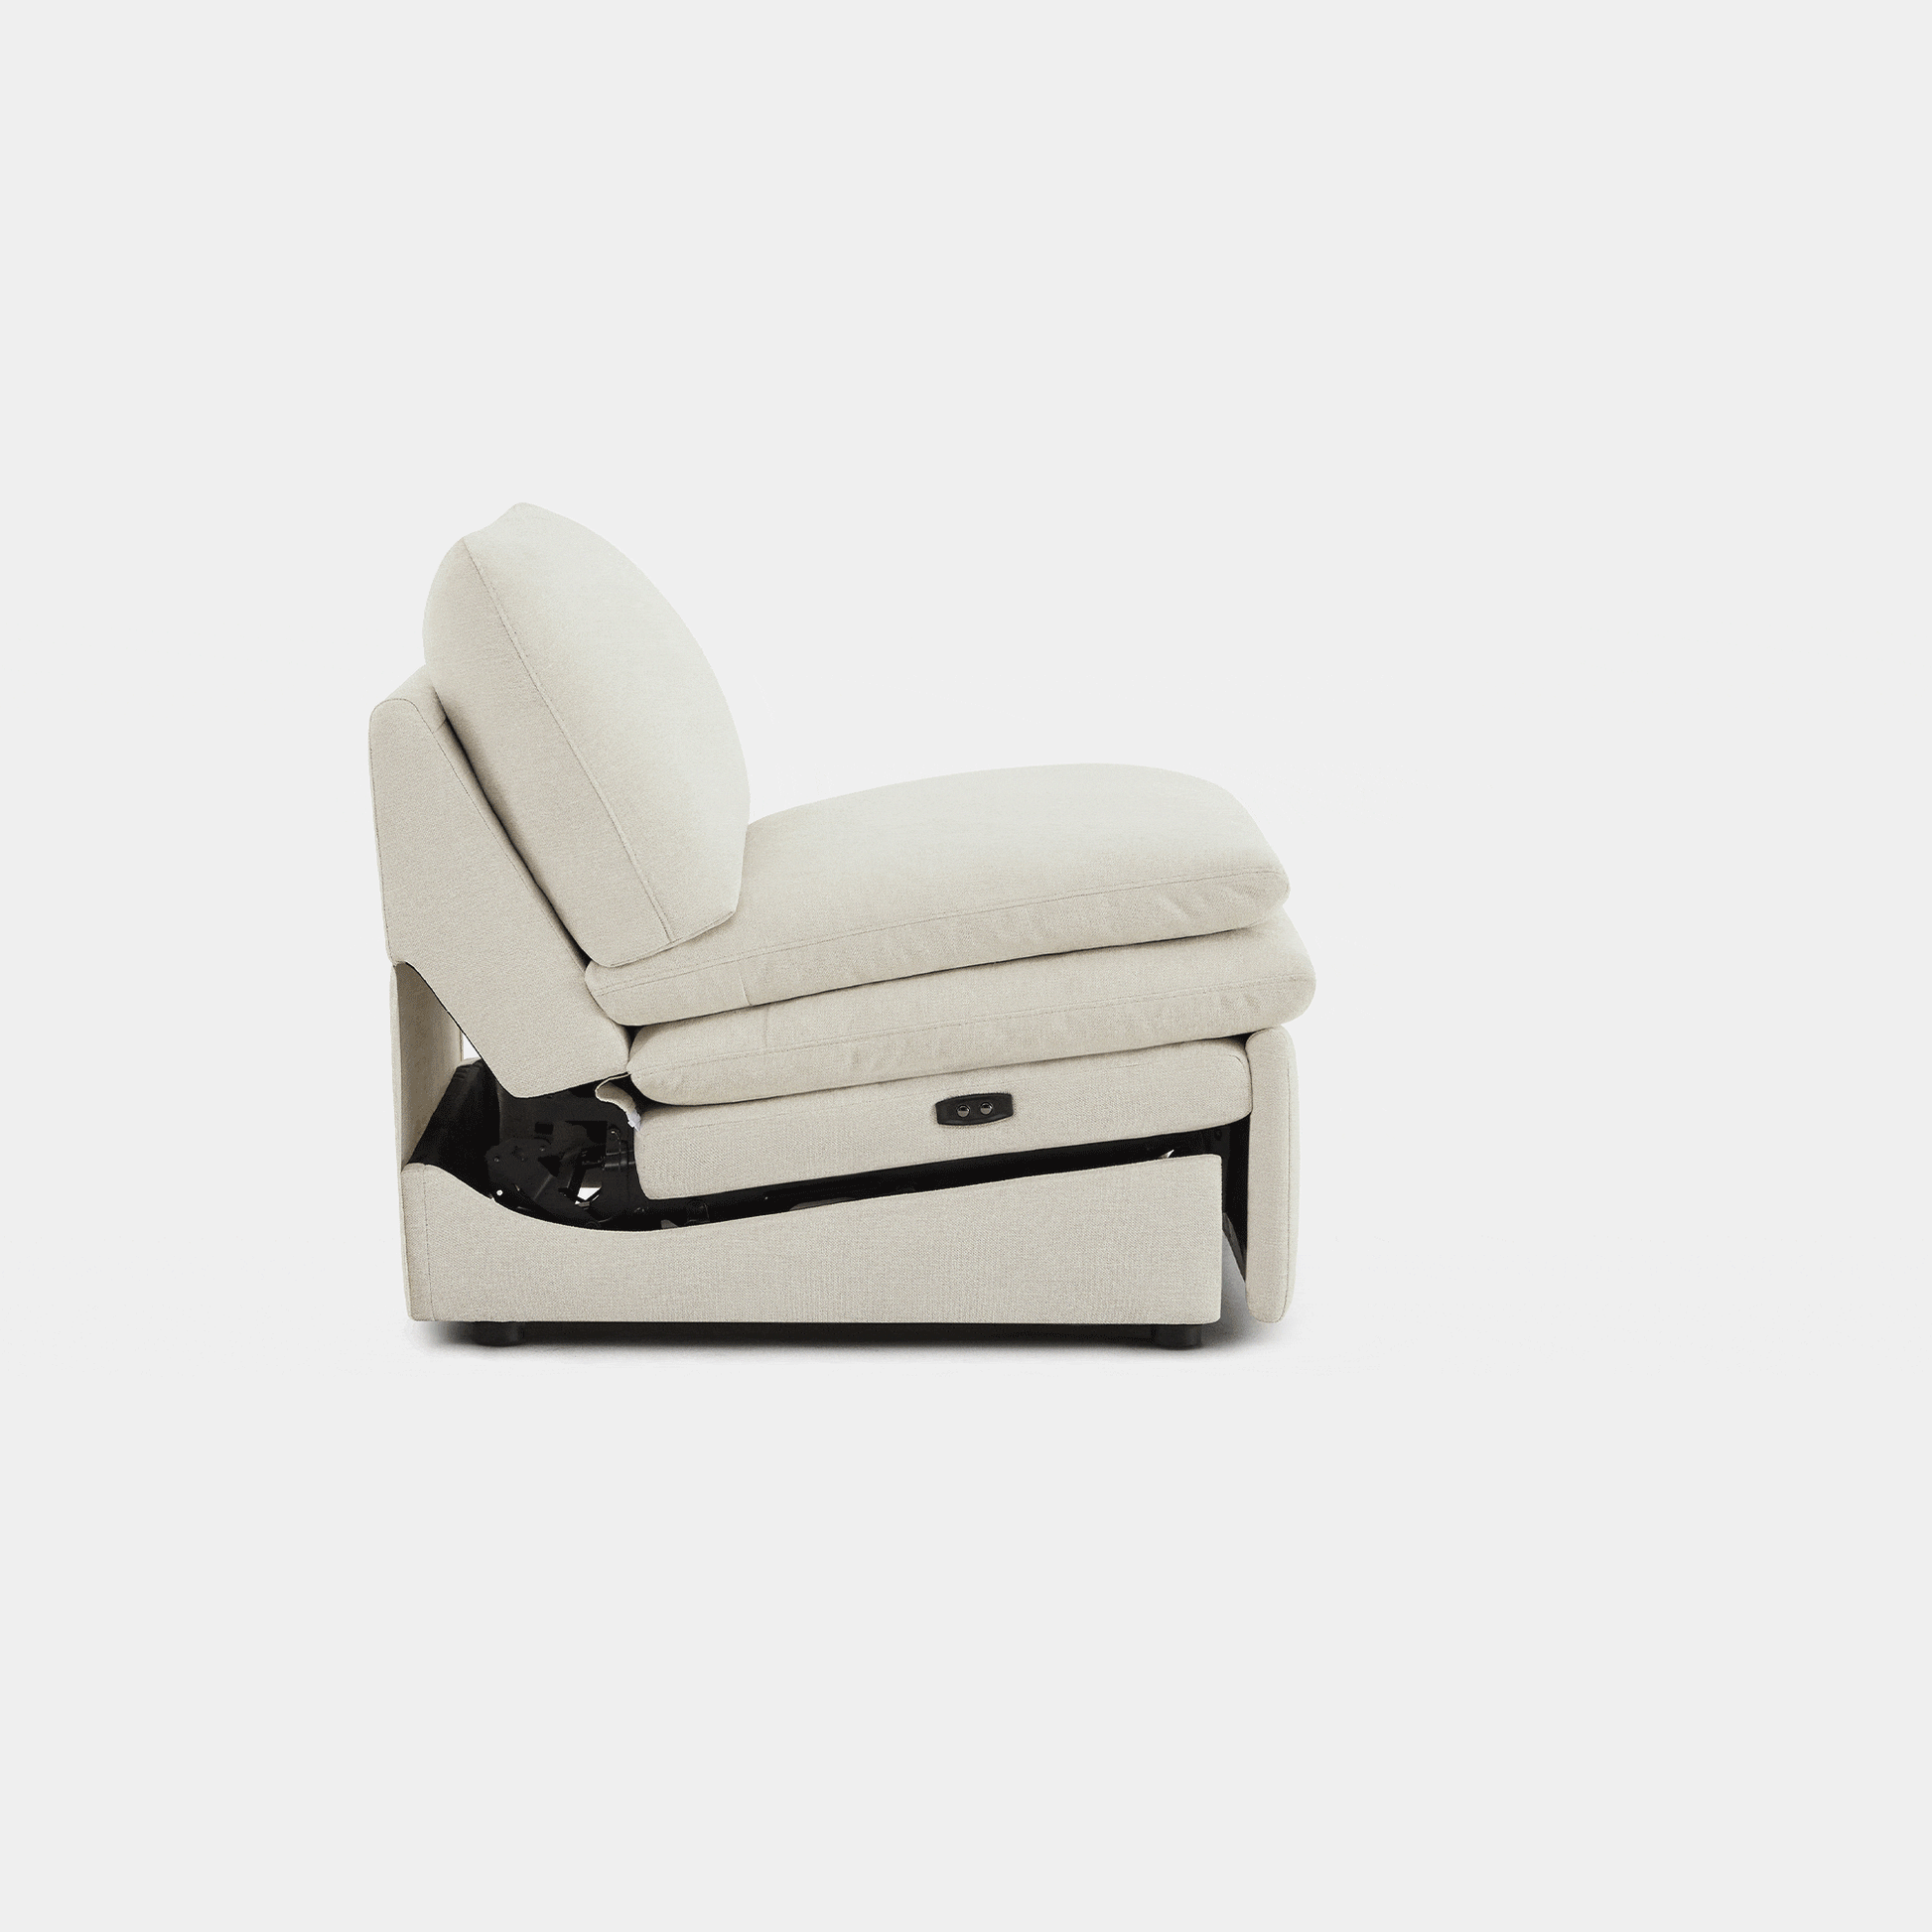 CHITA modular couch